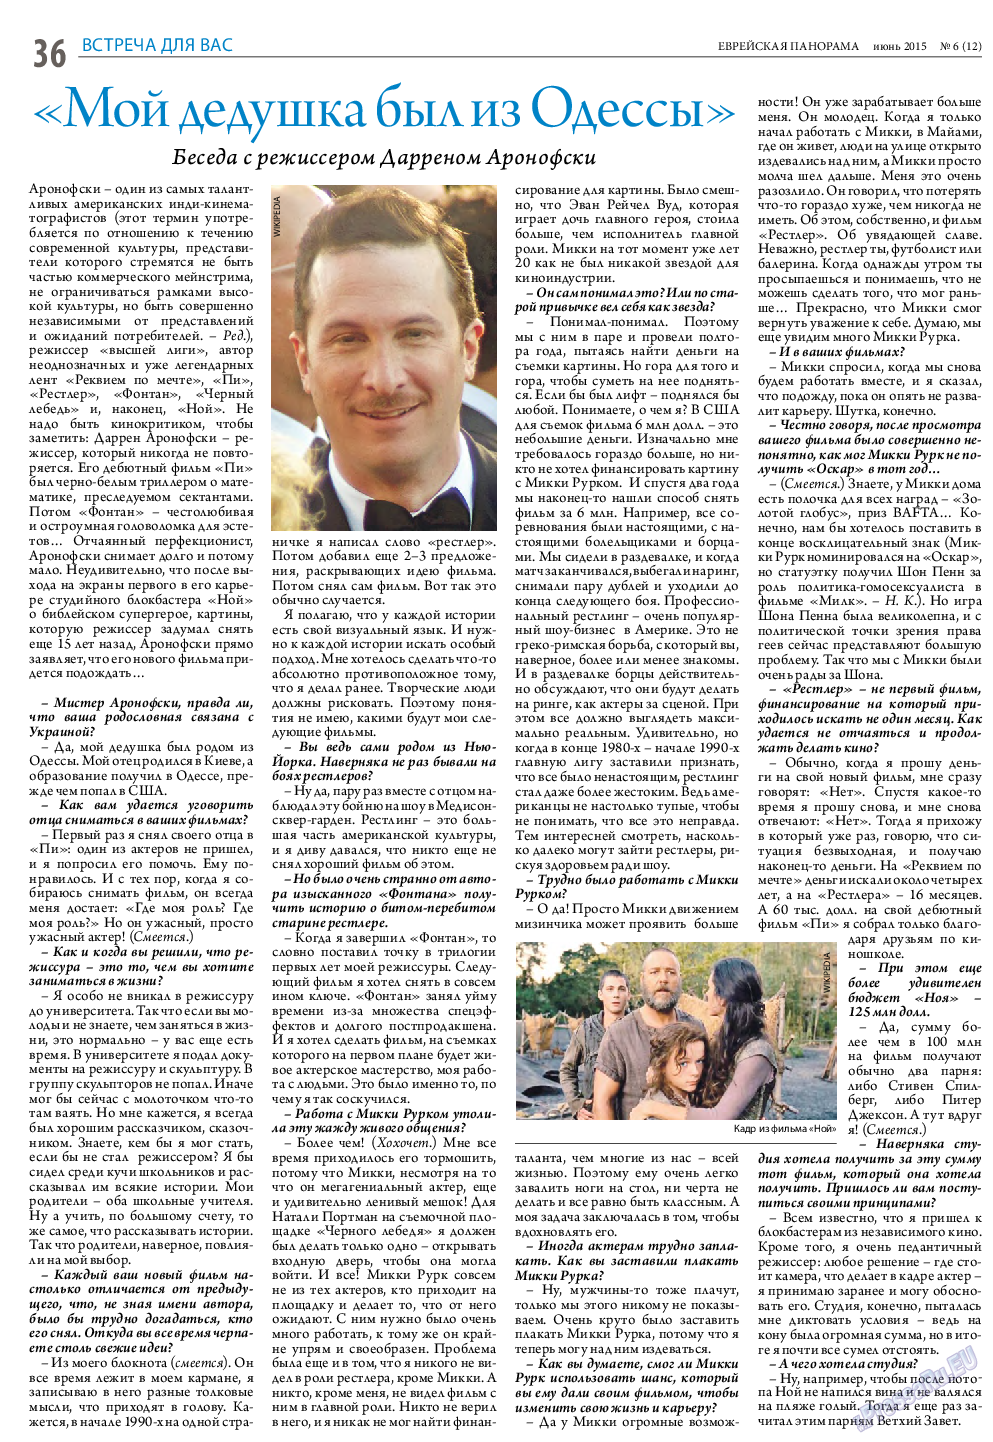 Еврейская панорама, газета. 2015 №6 стр.36